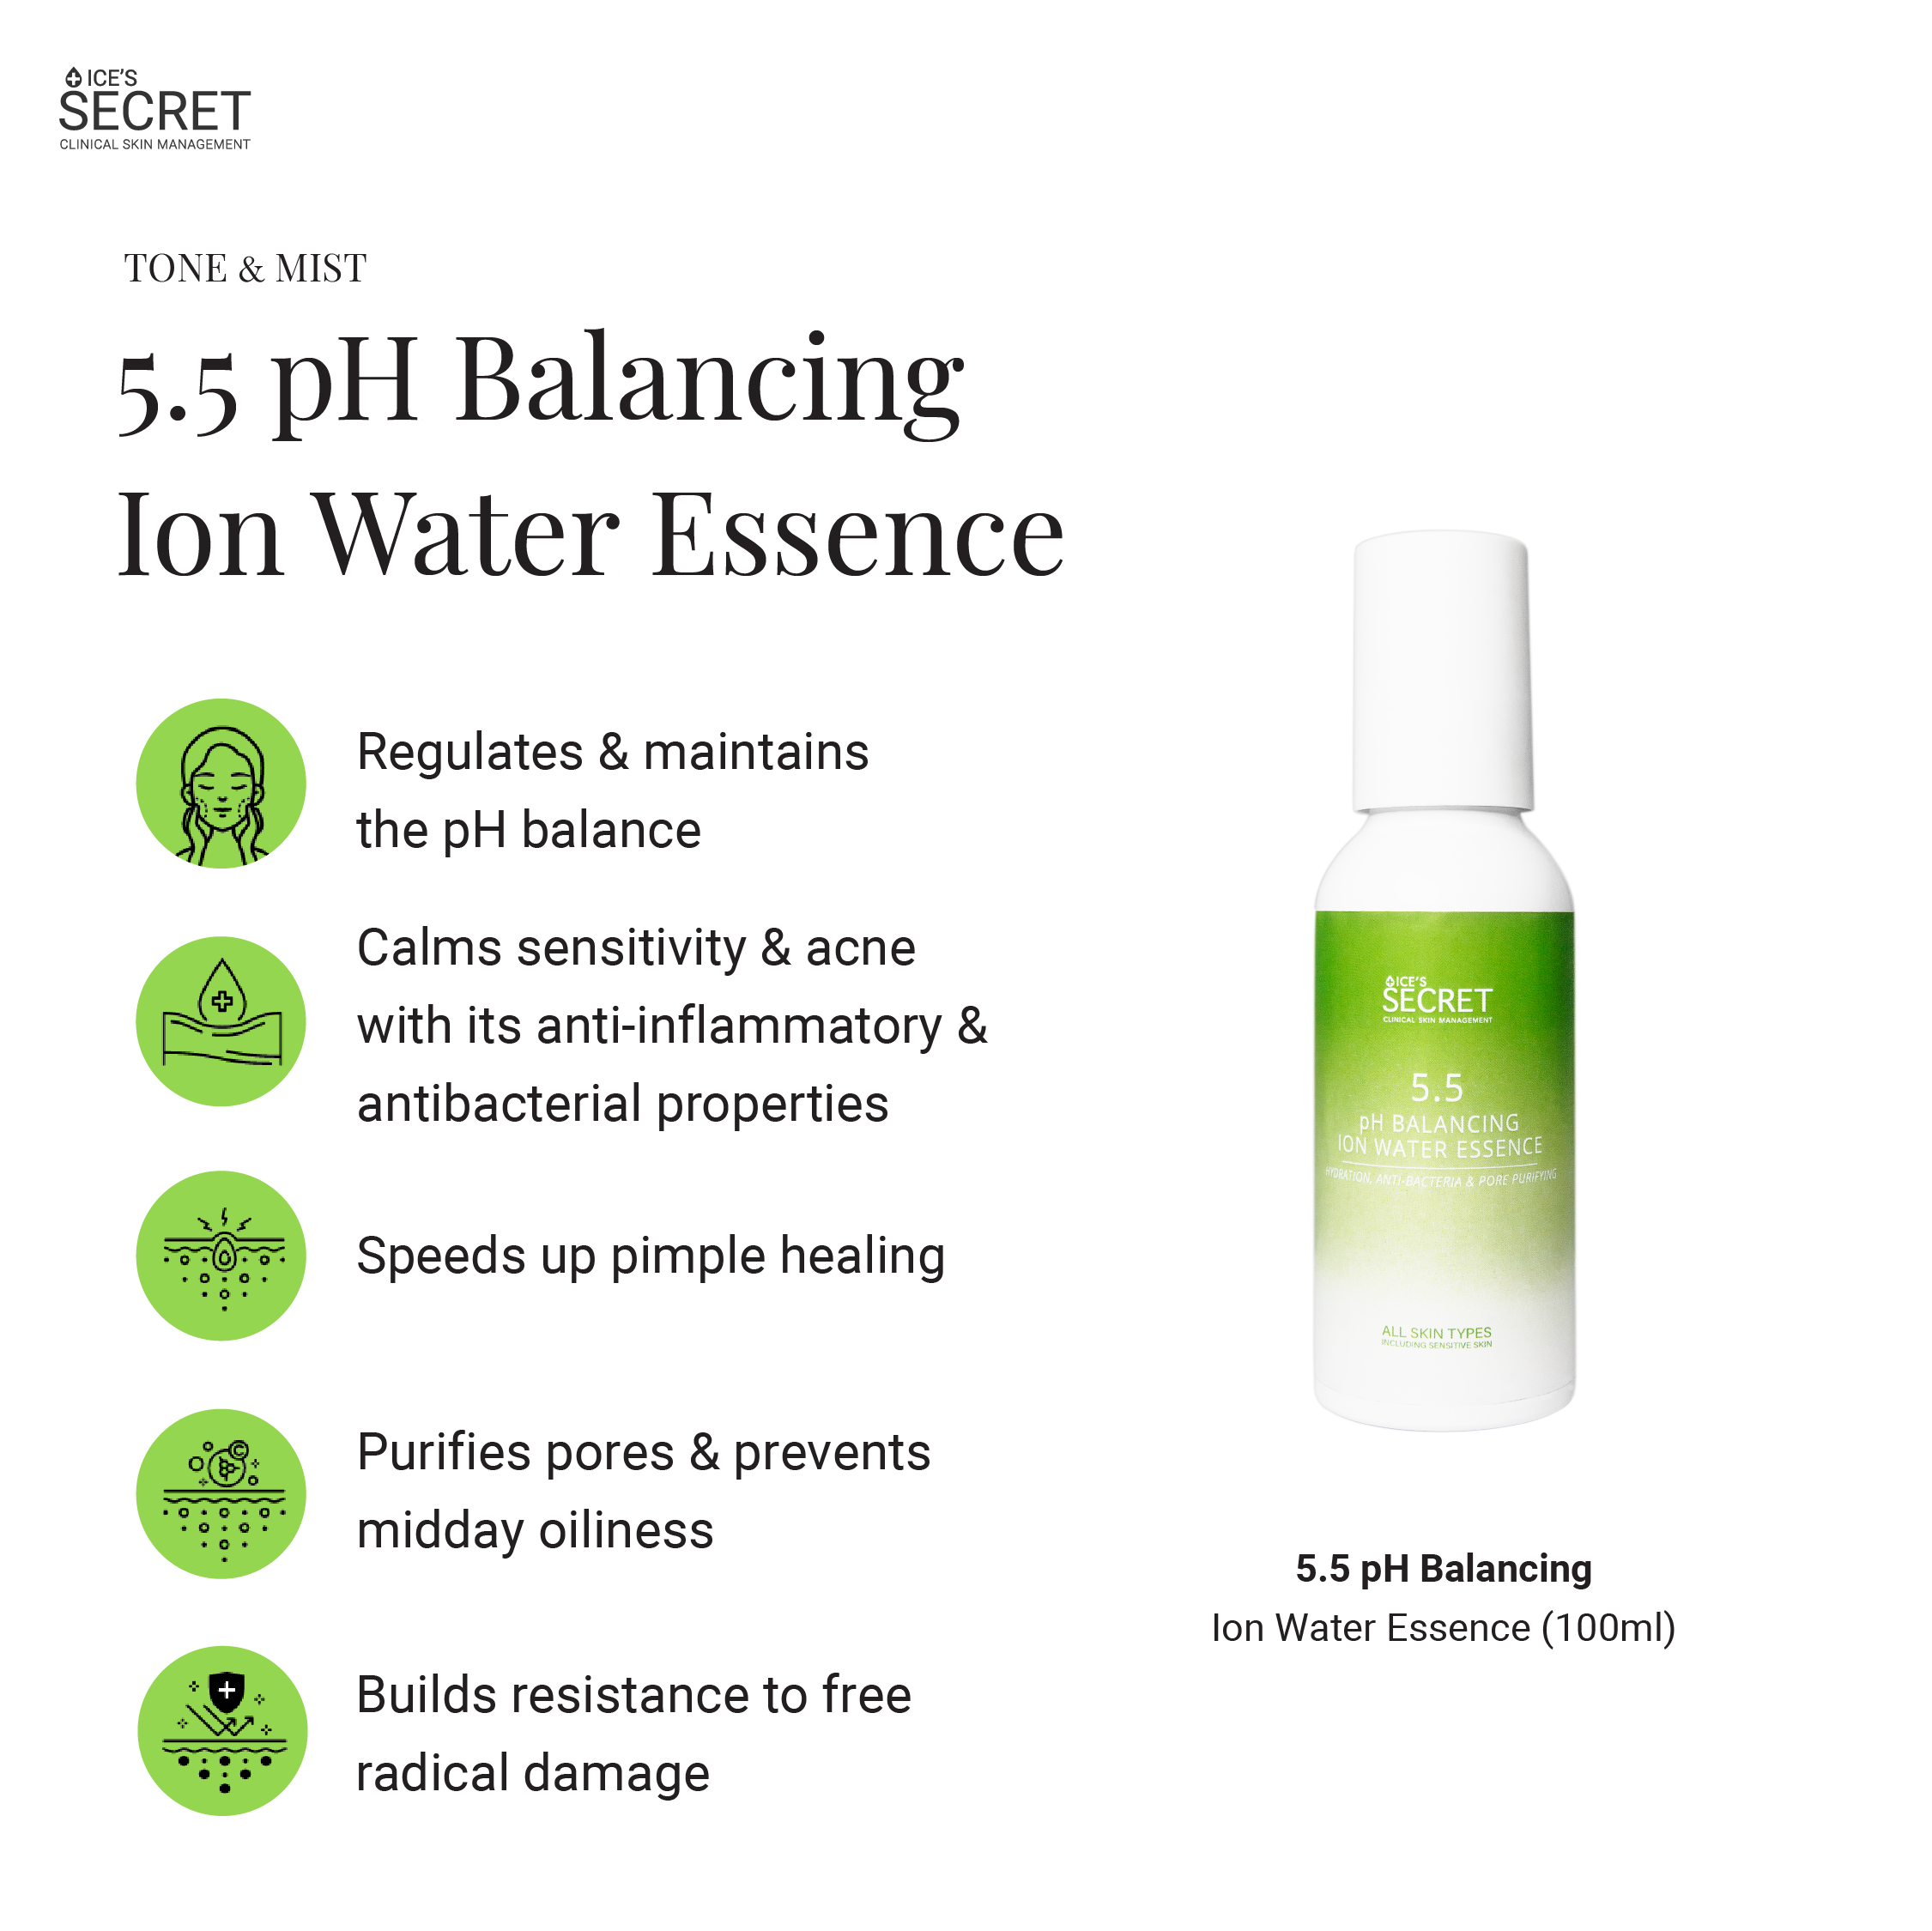 5.5 pH Balancing Ion Water Essence